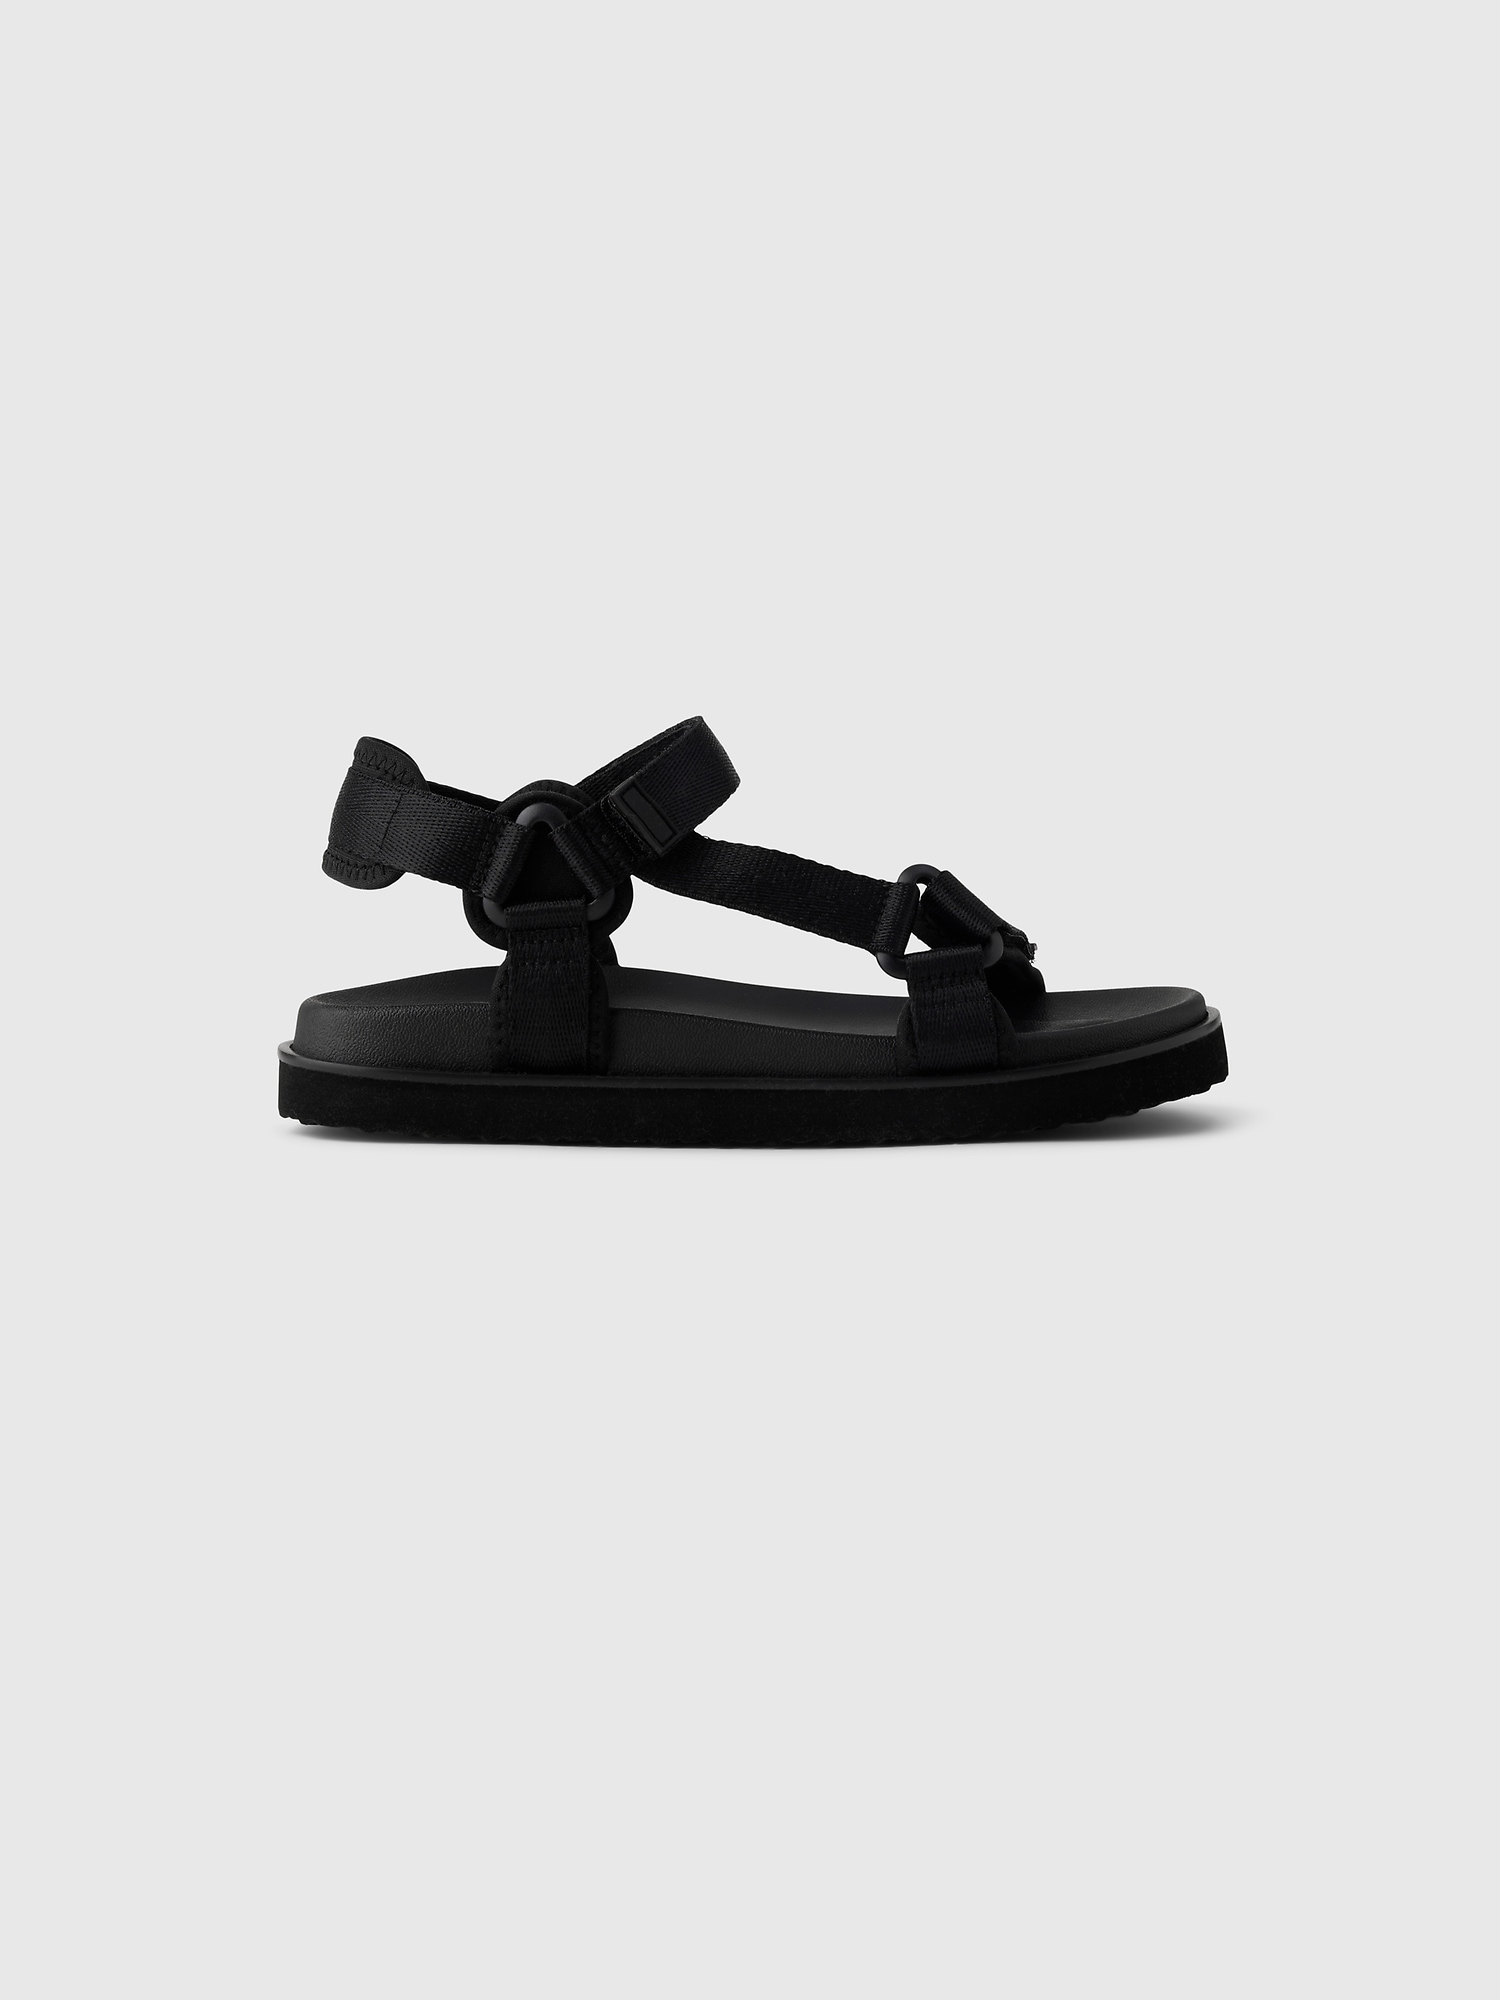 Girls' Strap Sandals by Gap Black Size 5/6